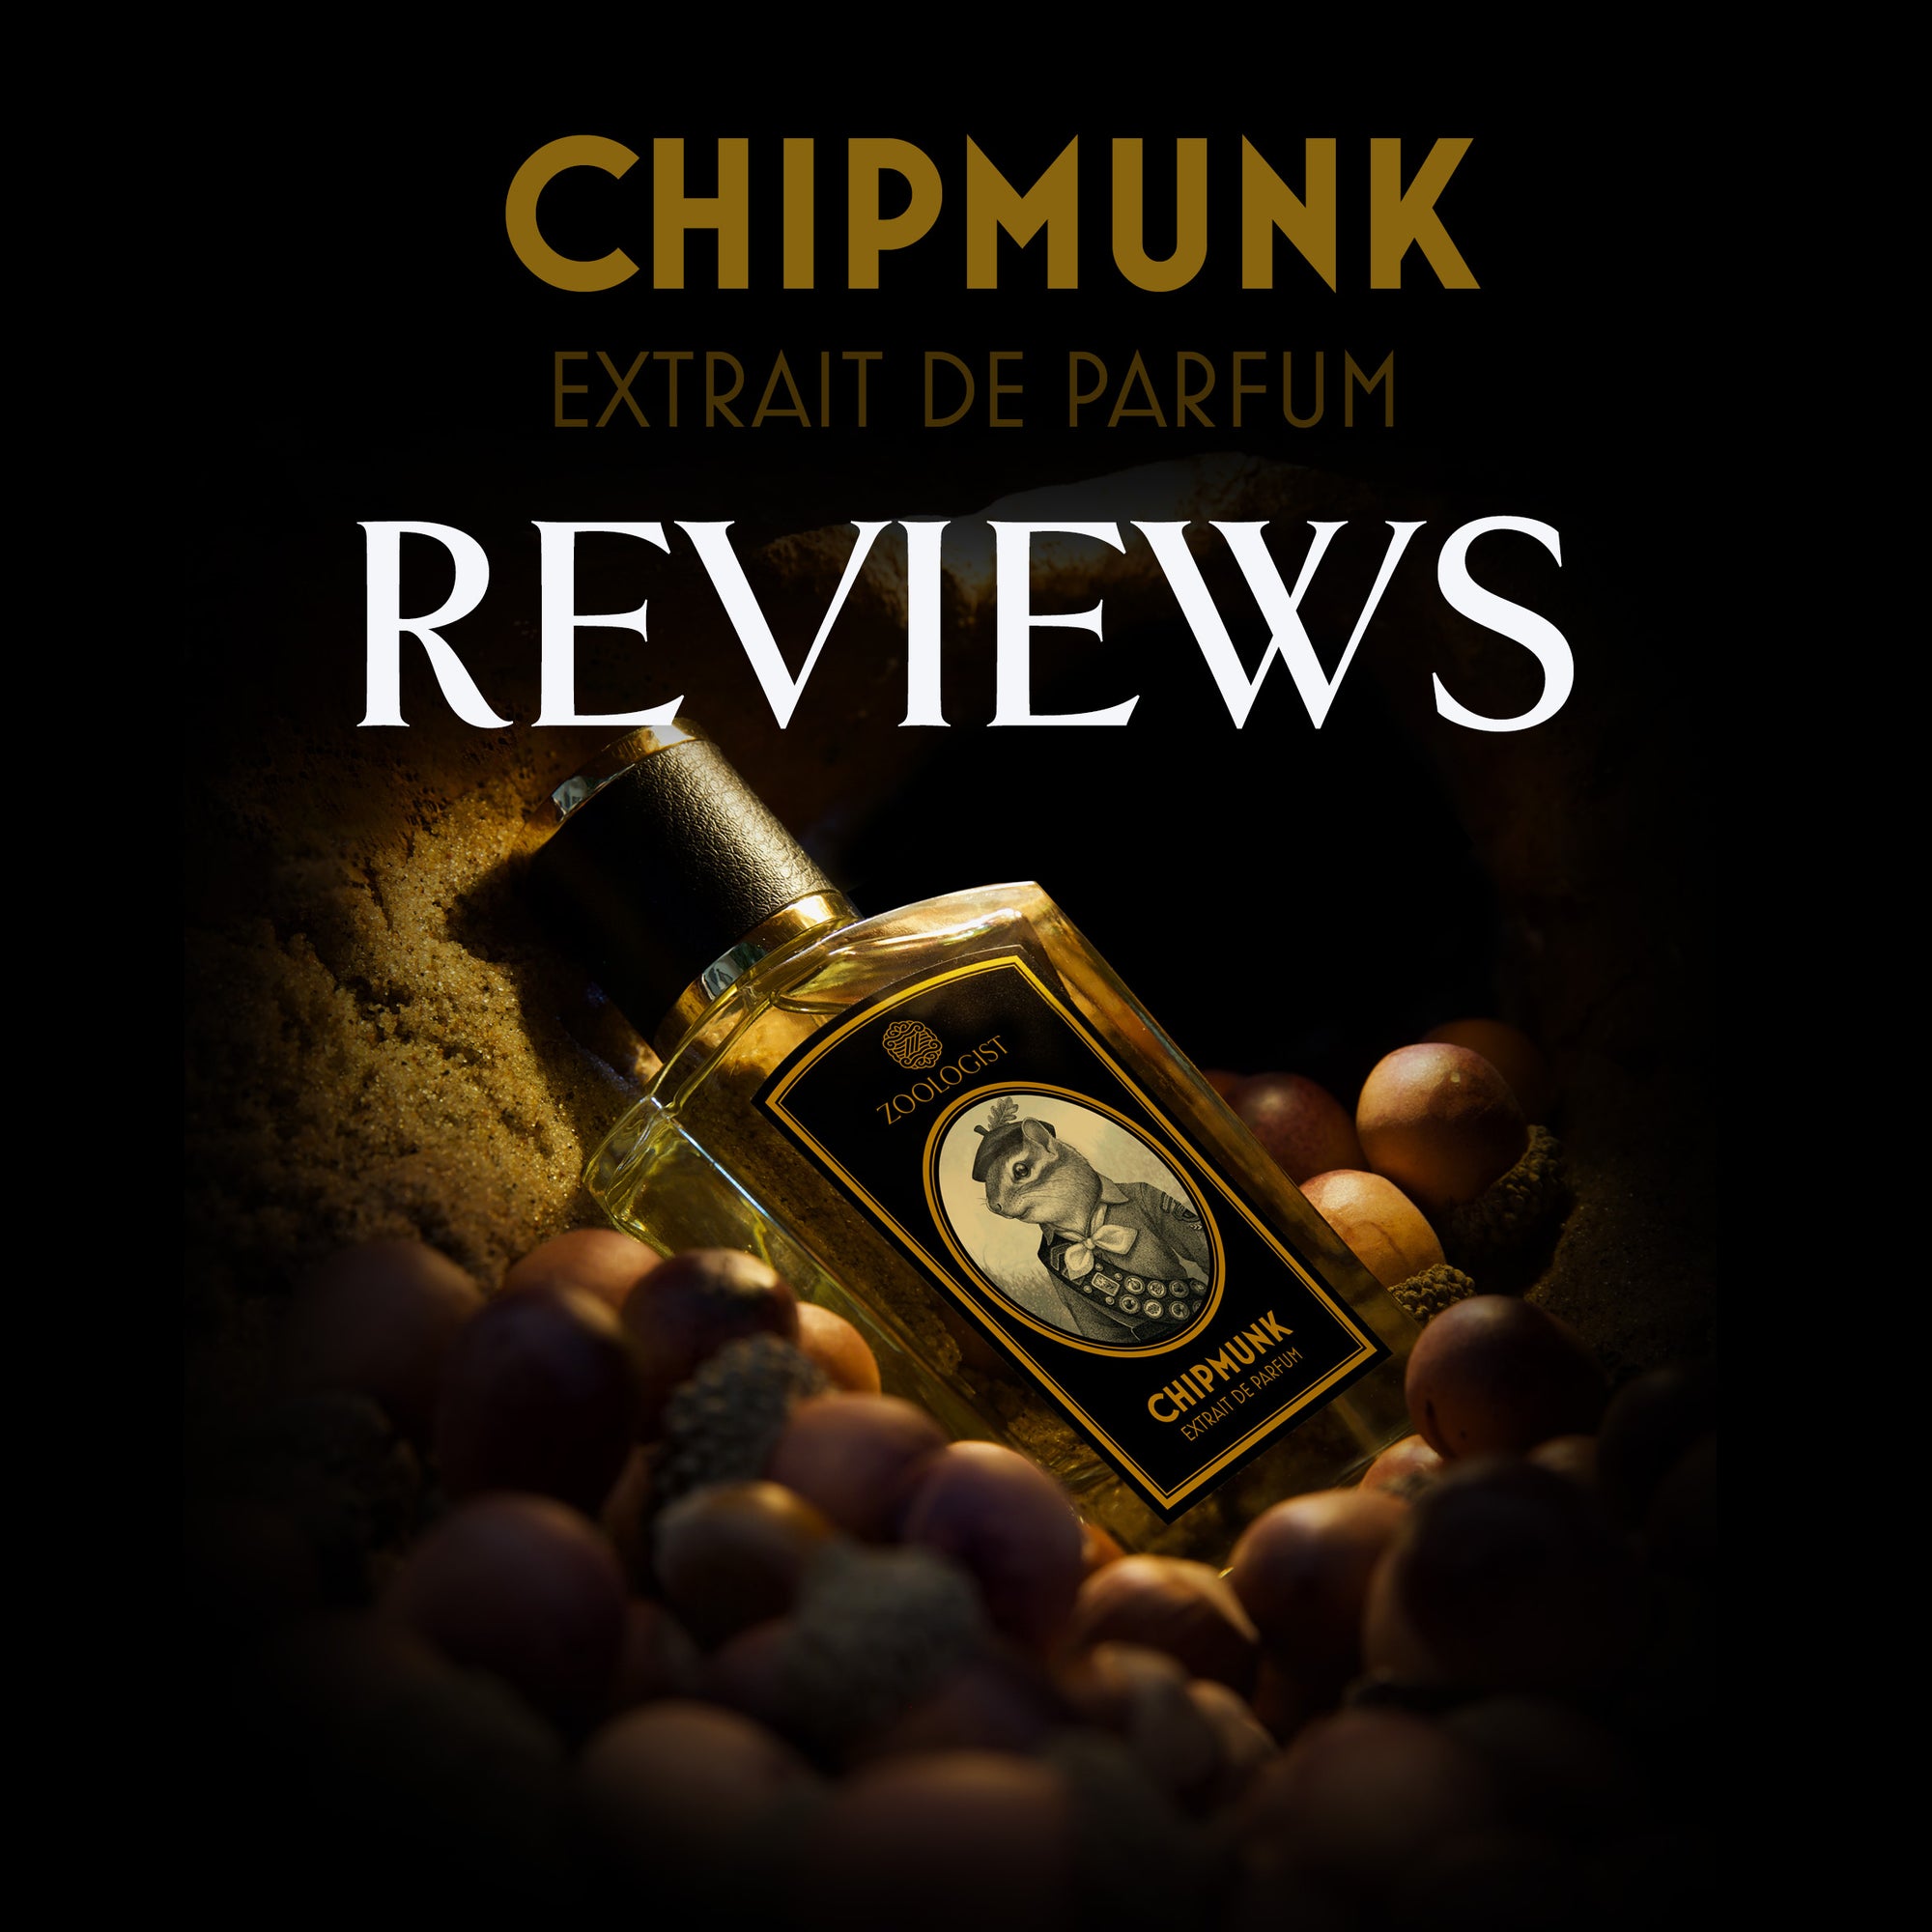 Zoologist Chipmunk Reviews Roundup